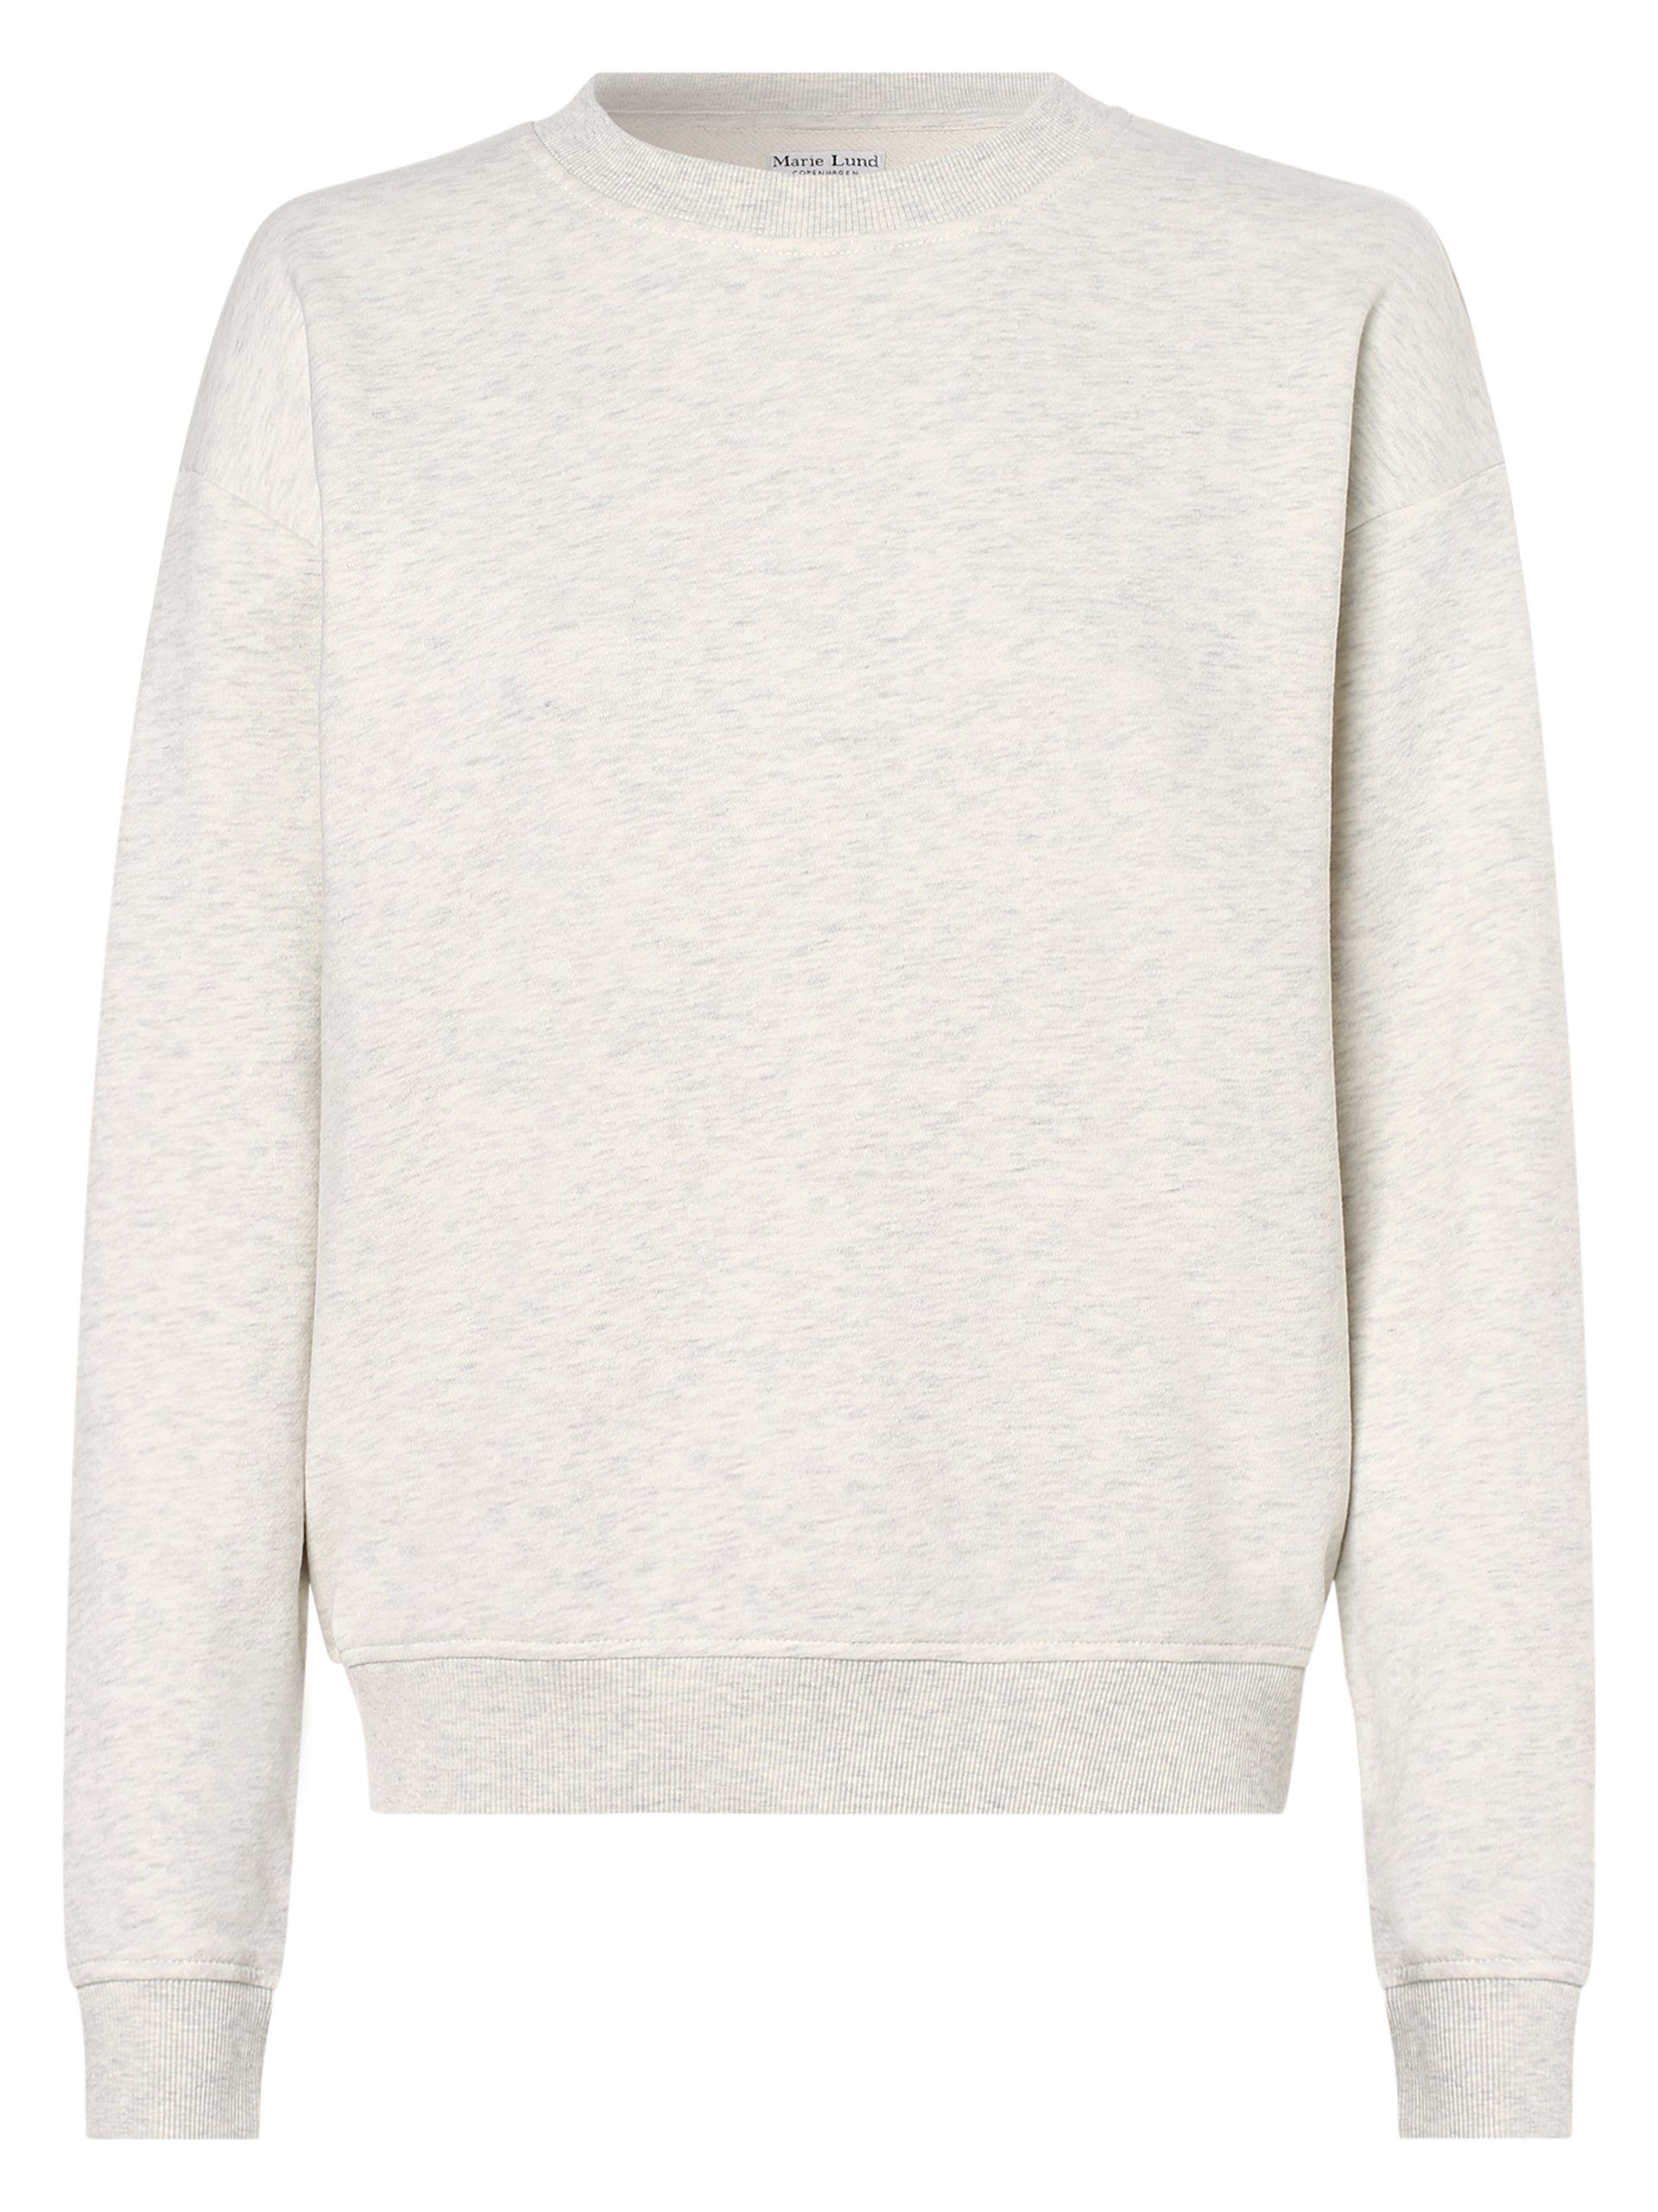 Marie Lund Sweatshirt ecru grau | Sweatshirts